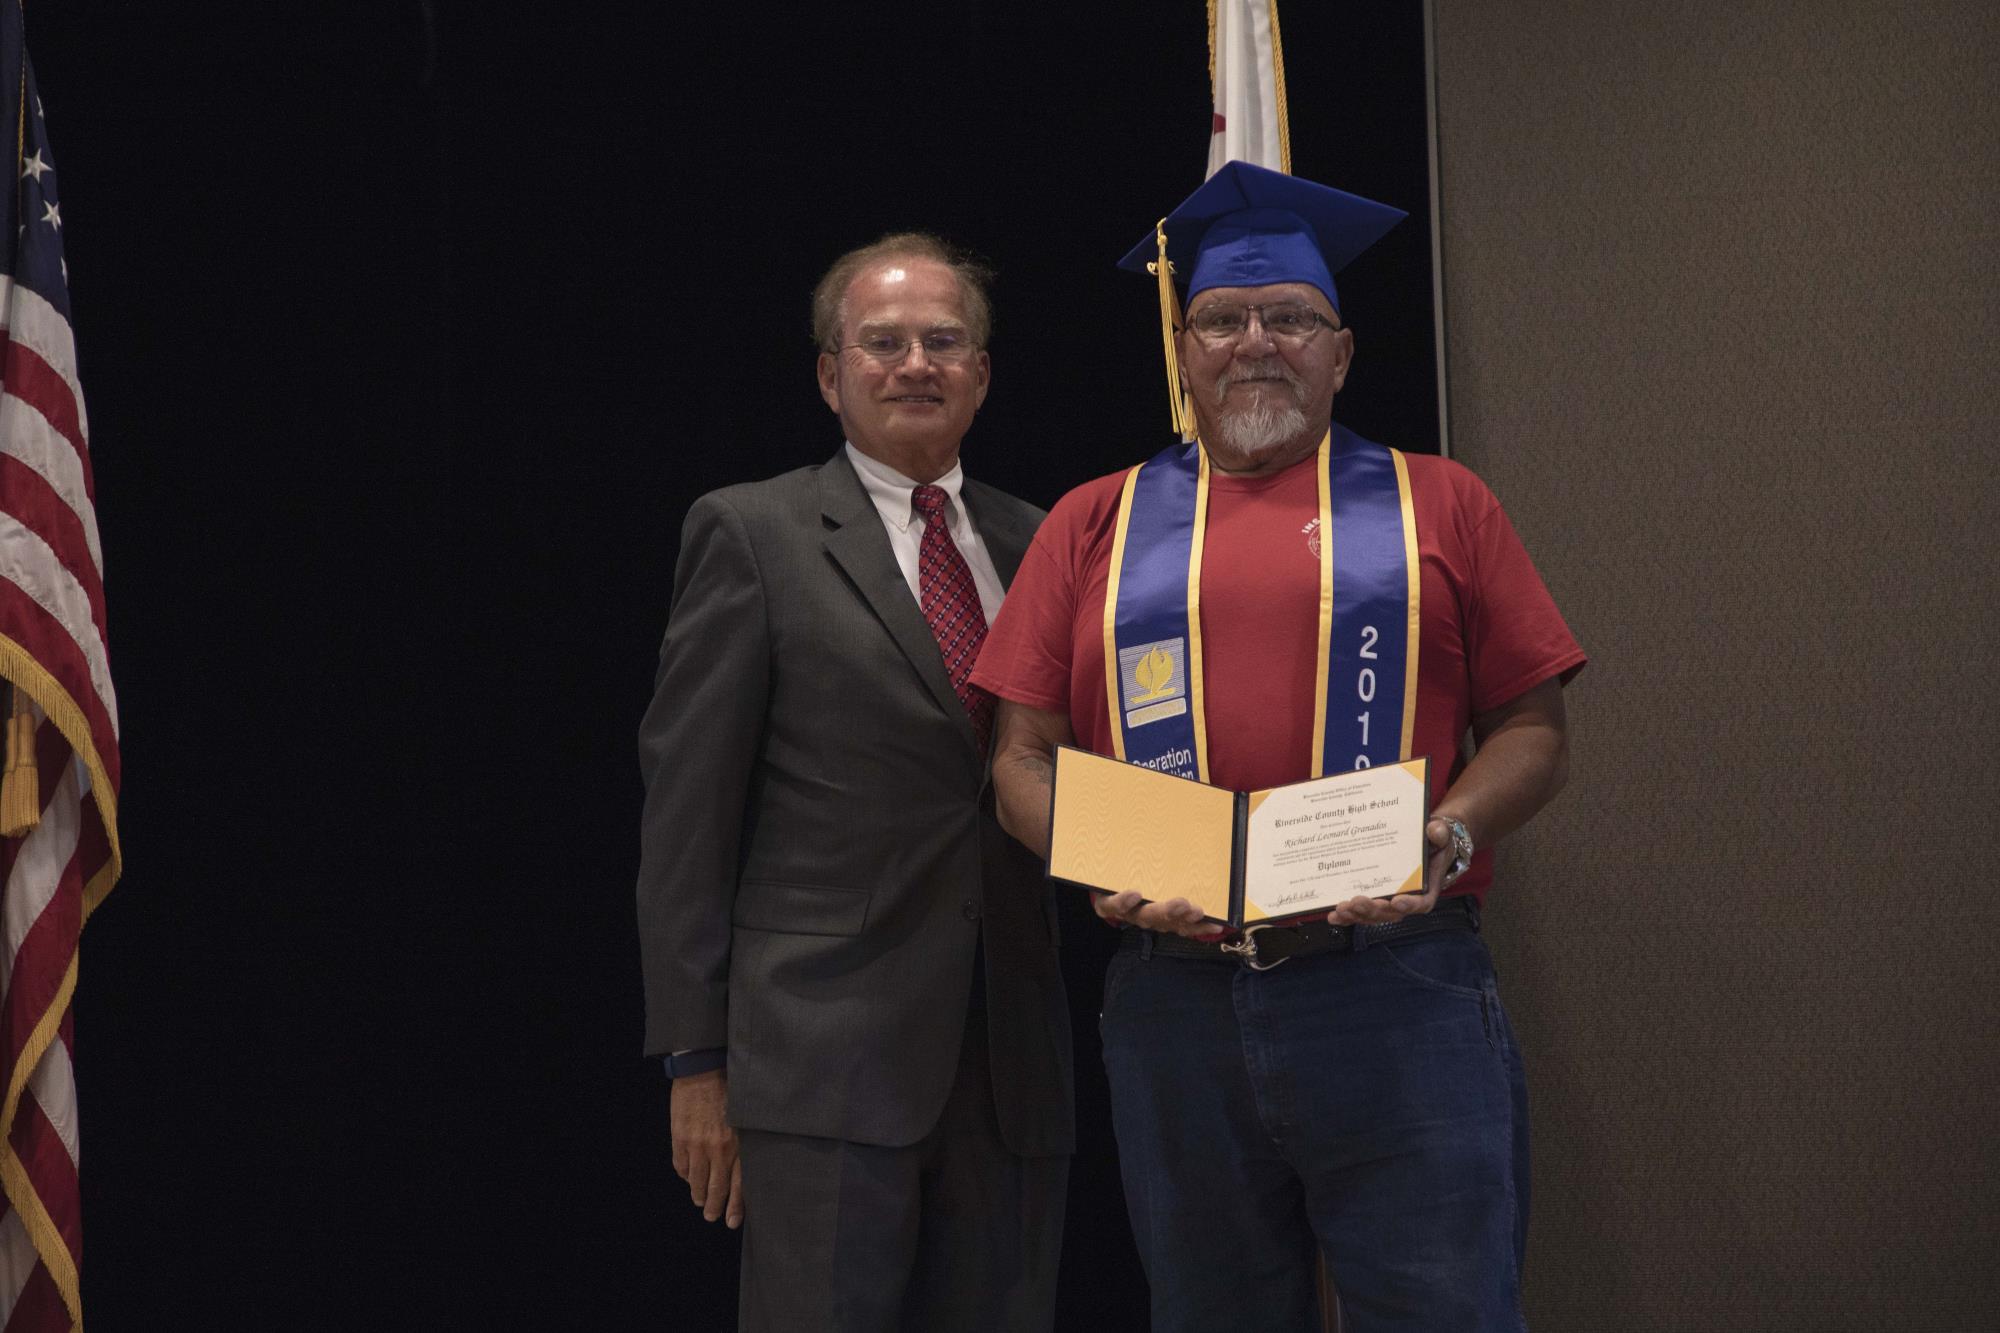 Richard Granados receives his diploma